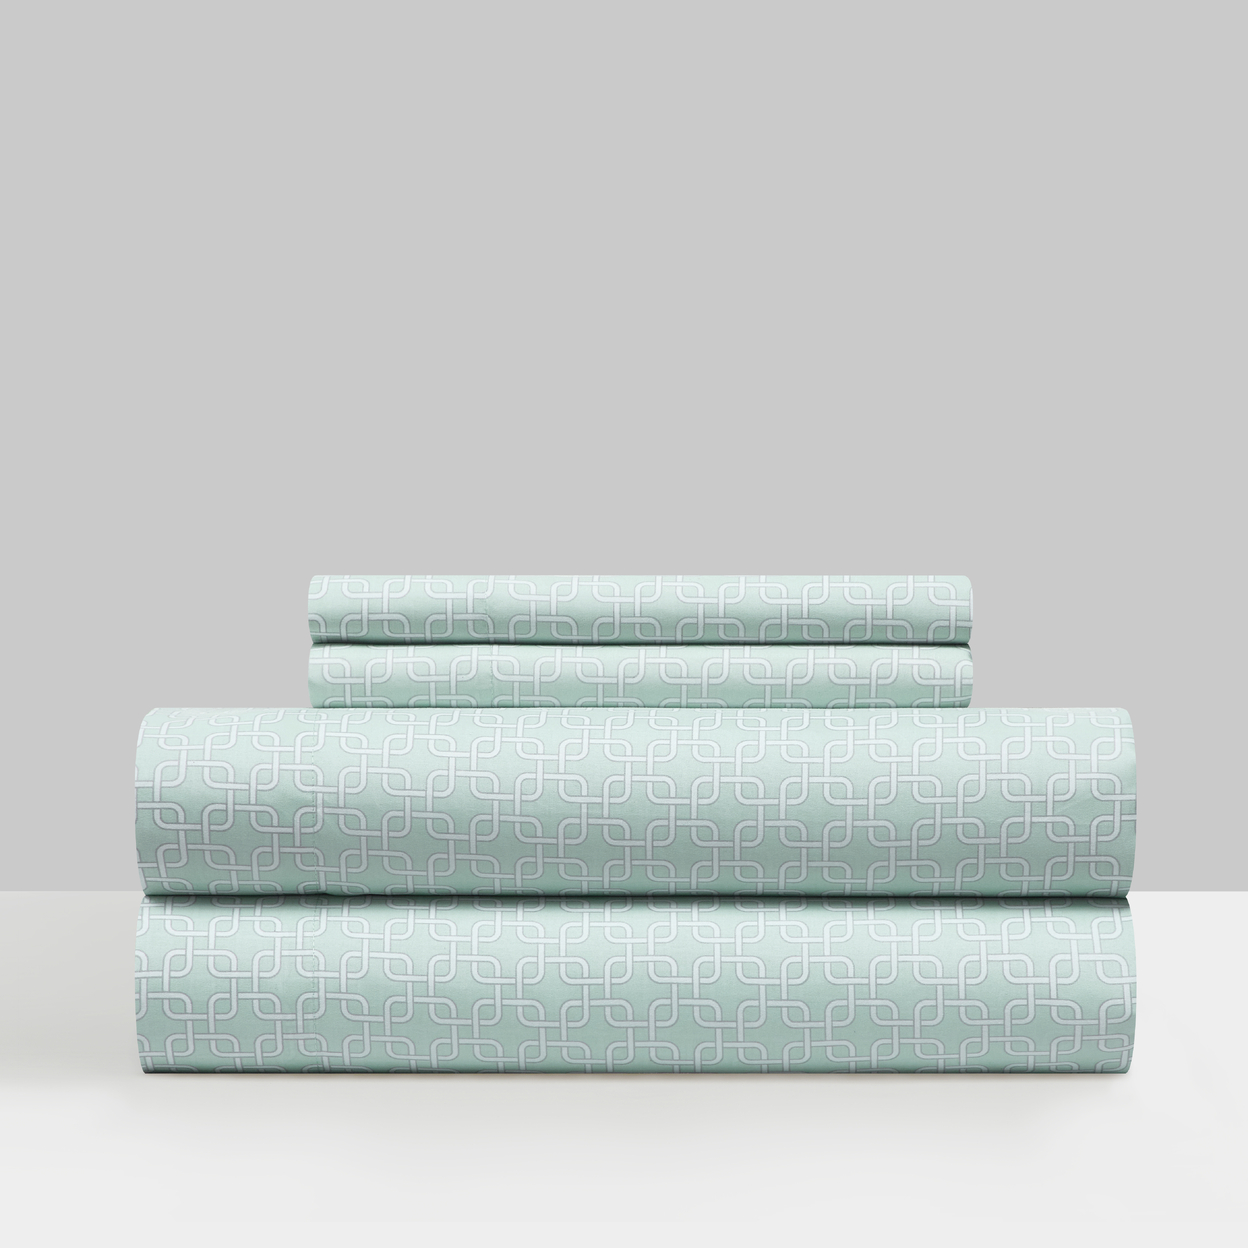 3 Or 4 Piece Silky Soft Brushed Microfiber Sheet Set - Samara Grey, Twin Extra-long